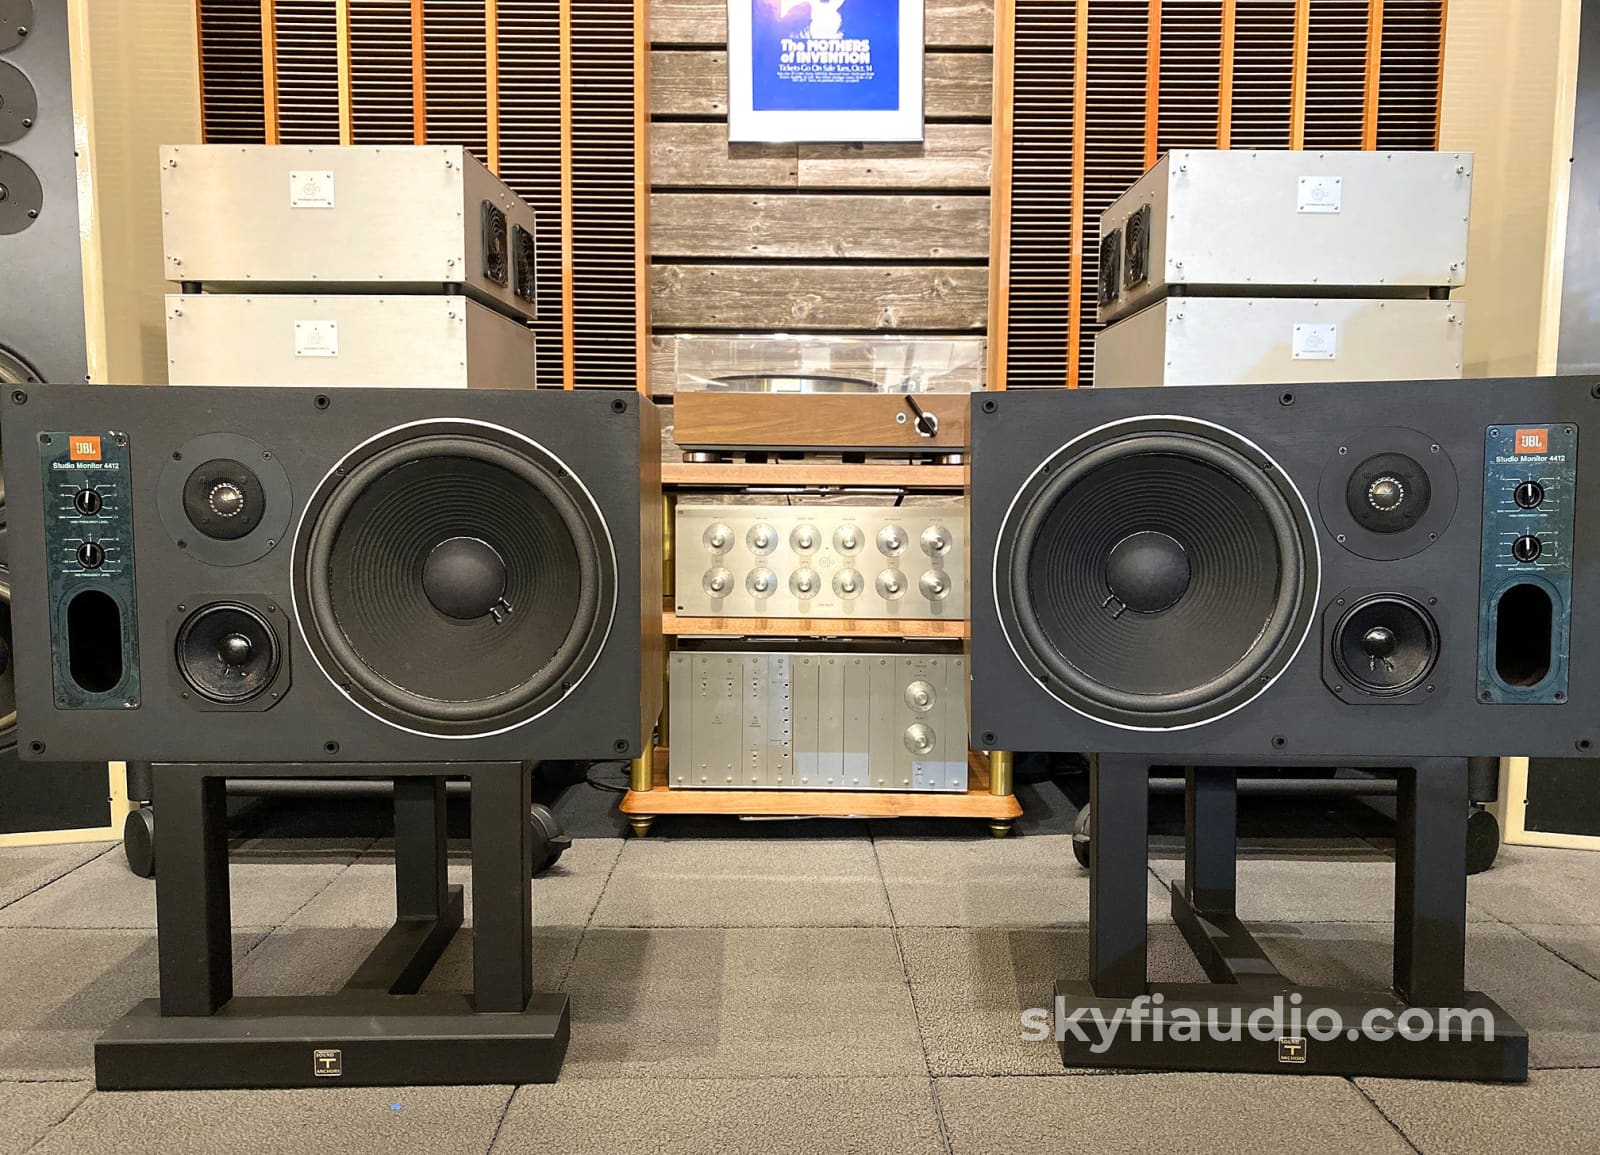 JBL Vintage Studio Monitor Speakers in Condition